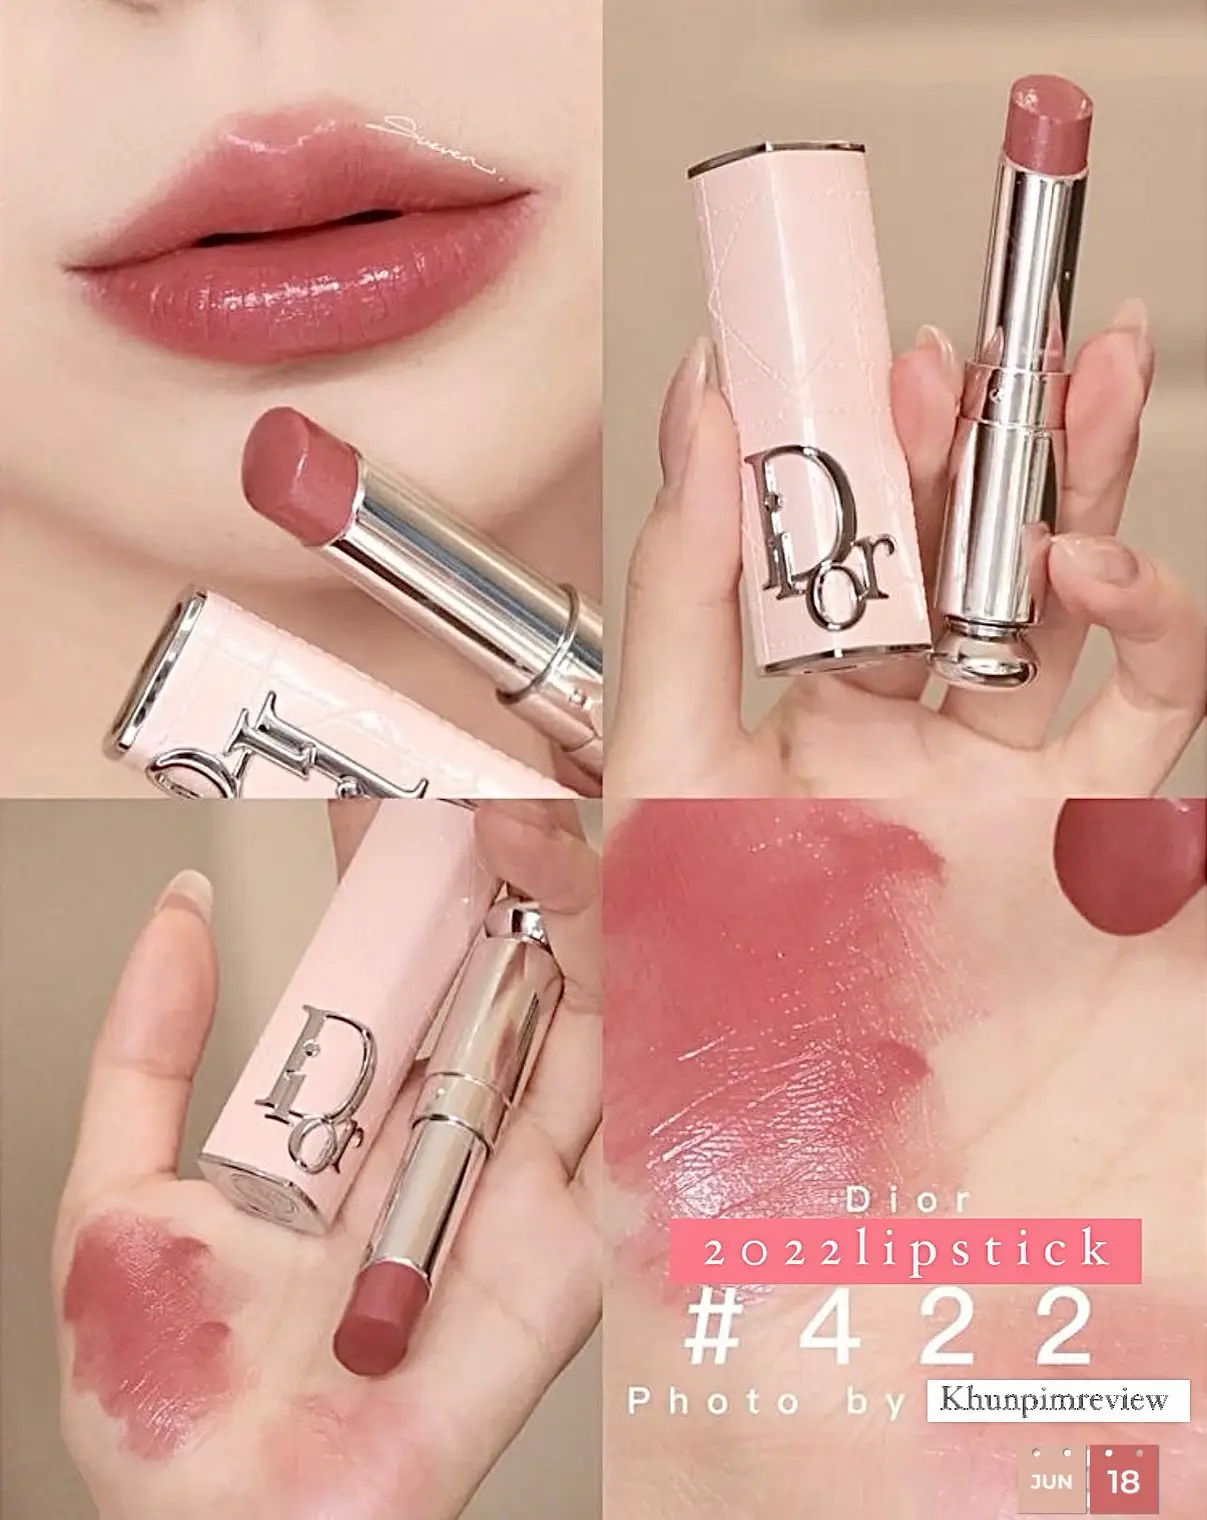 Dior Rose Des Vents #422 Dior Addict Hydrating Shine Lipstick